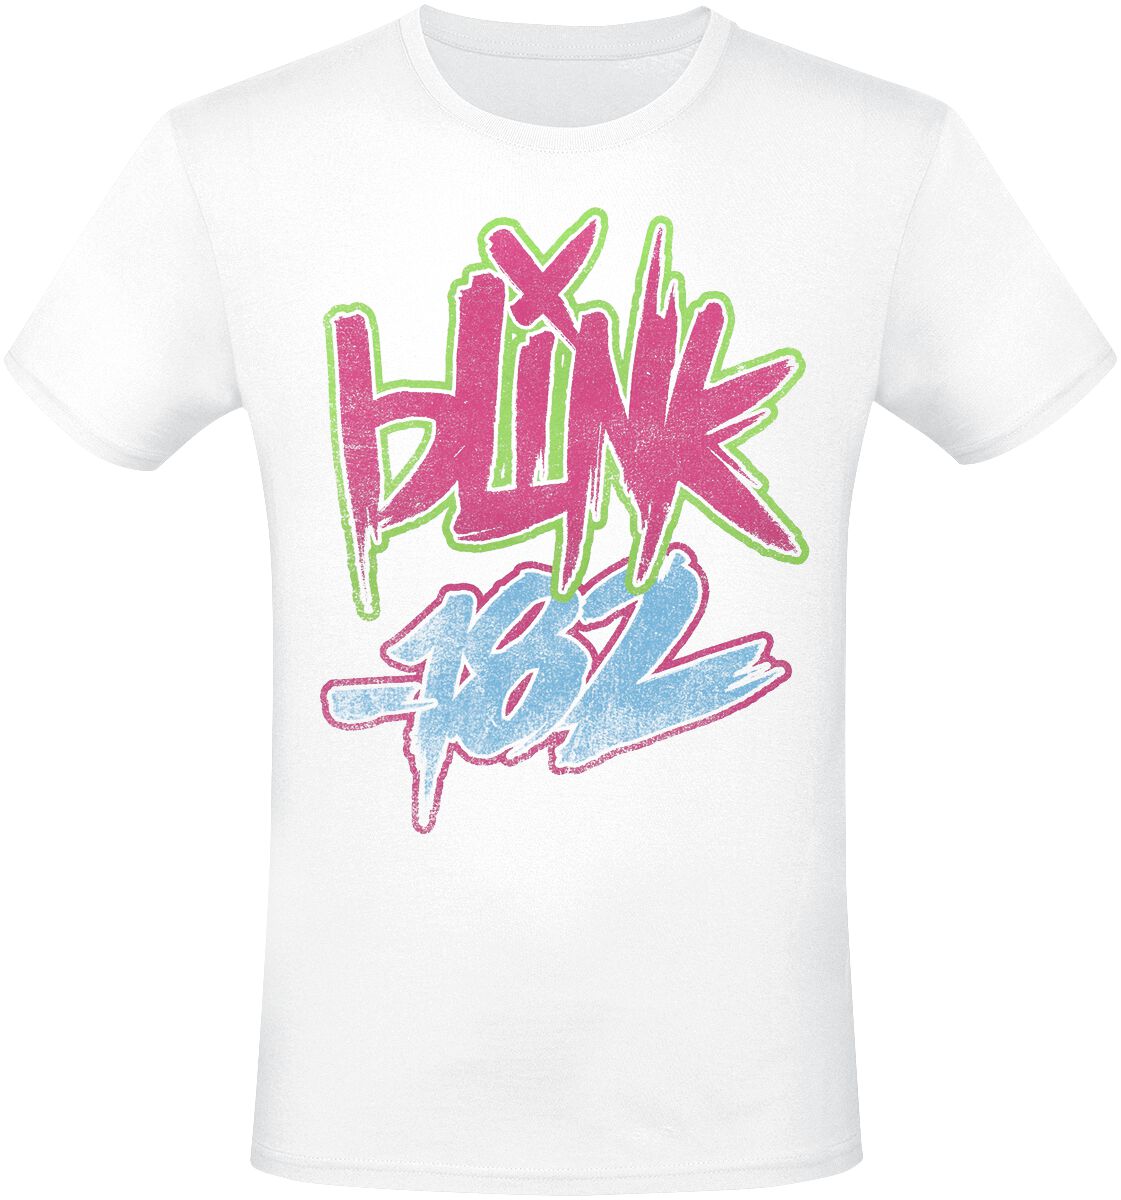 Blink-182 Text T-Shirt weiß in XL